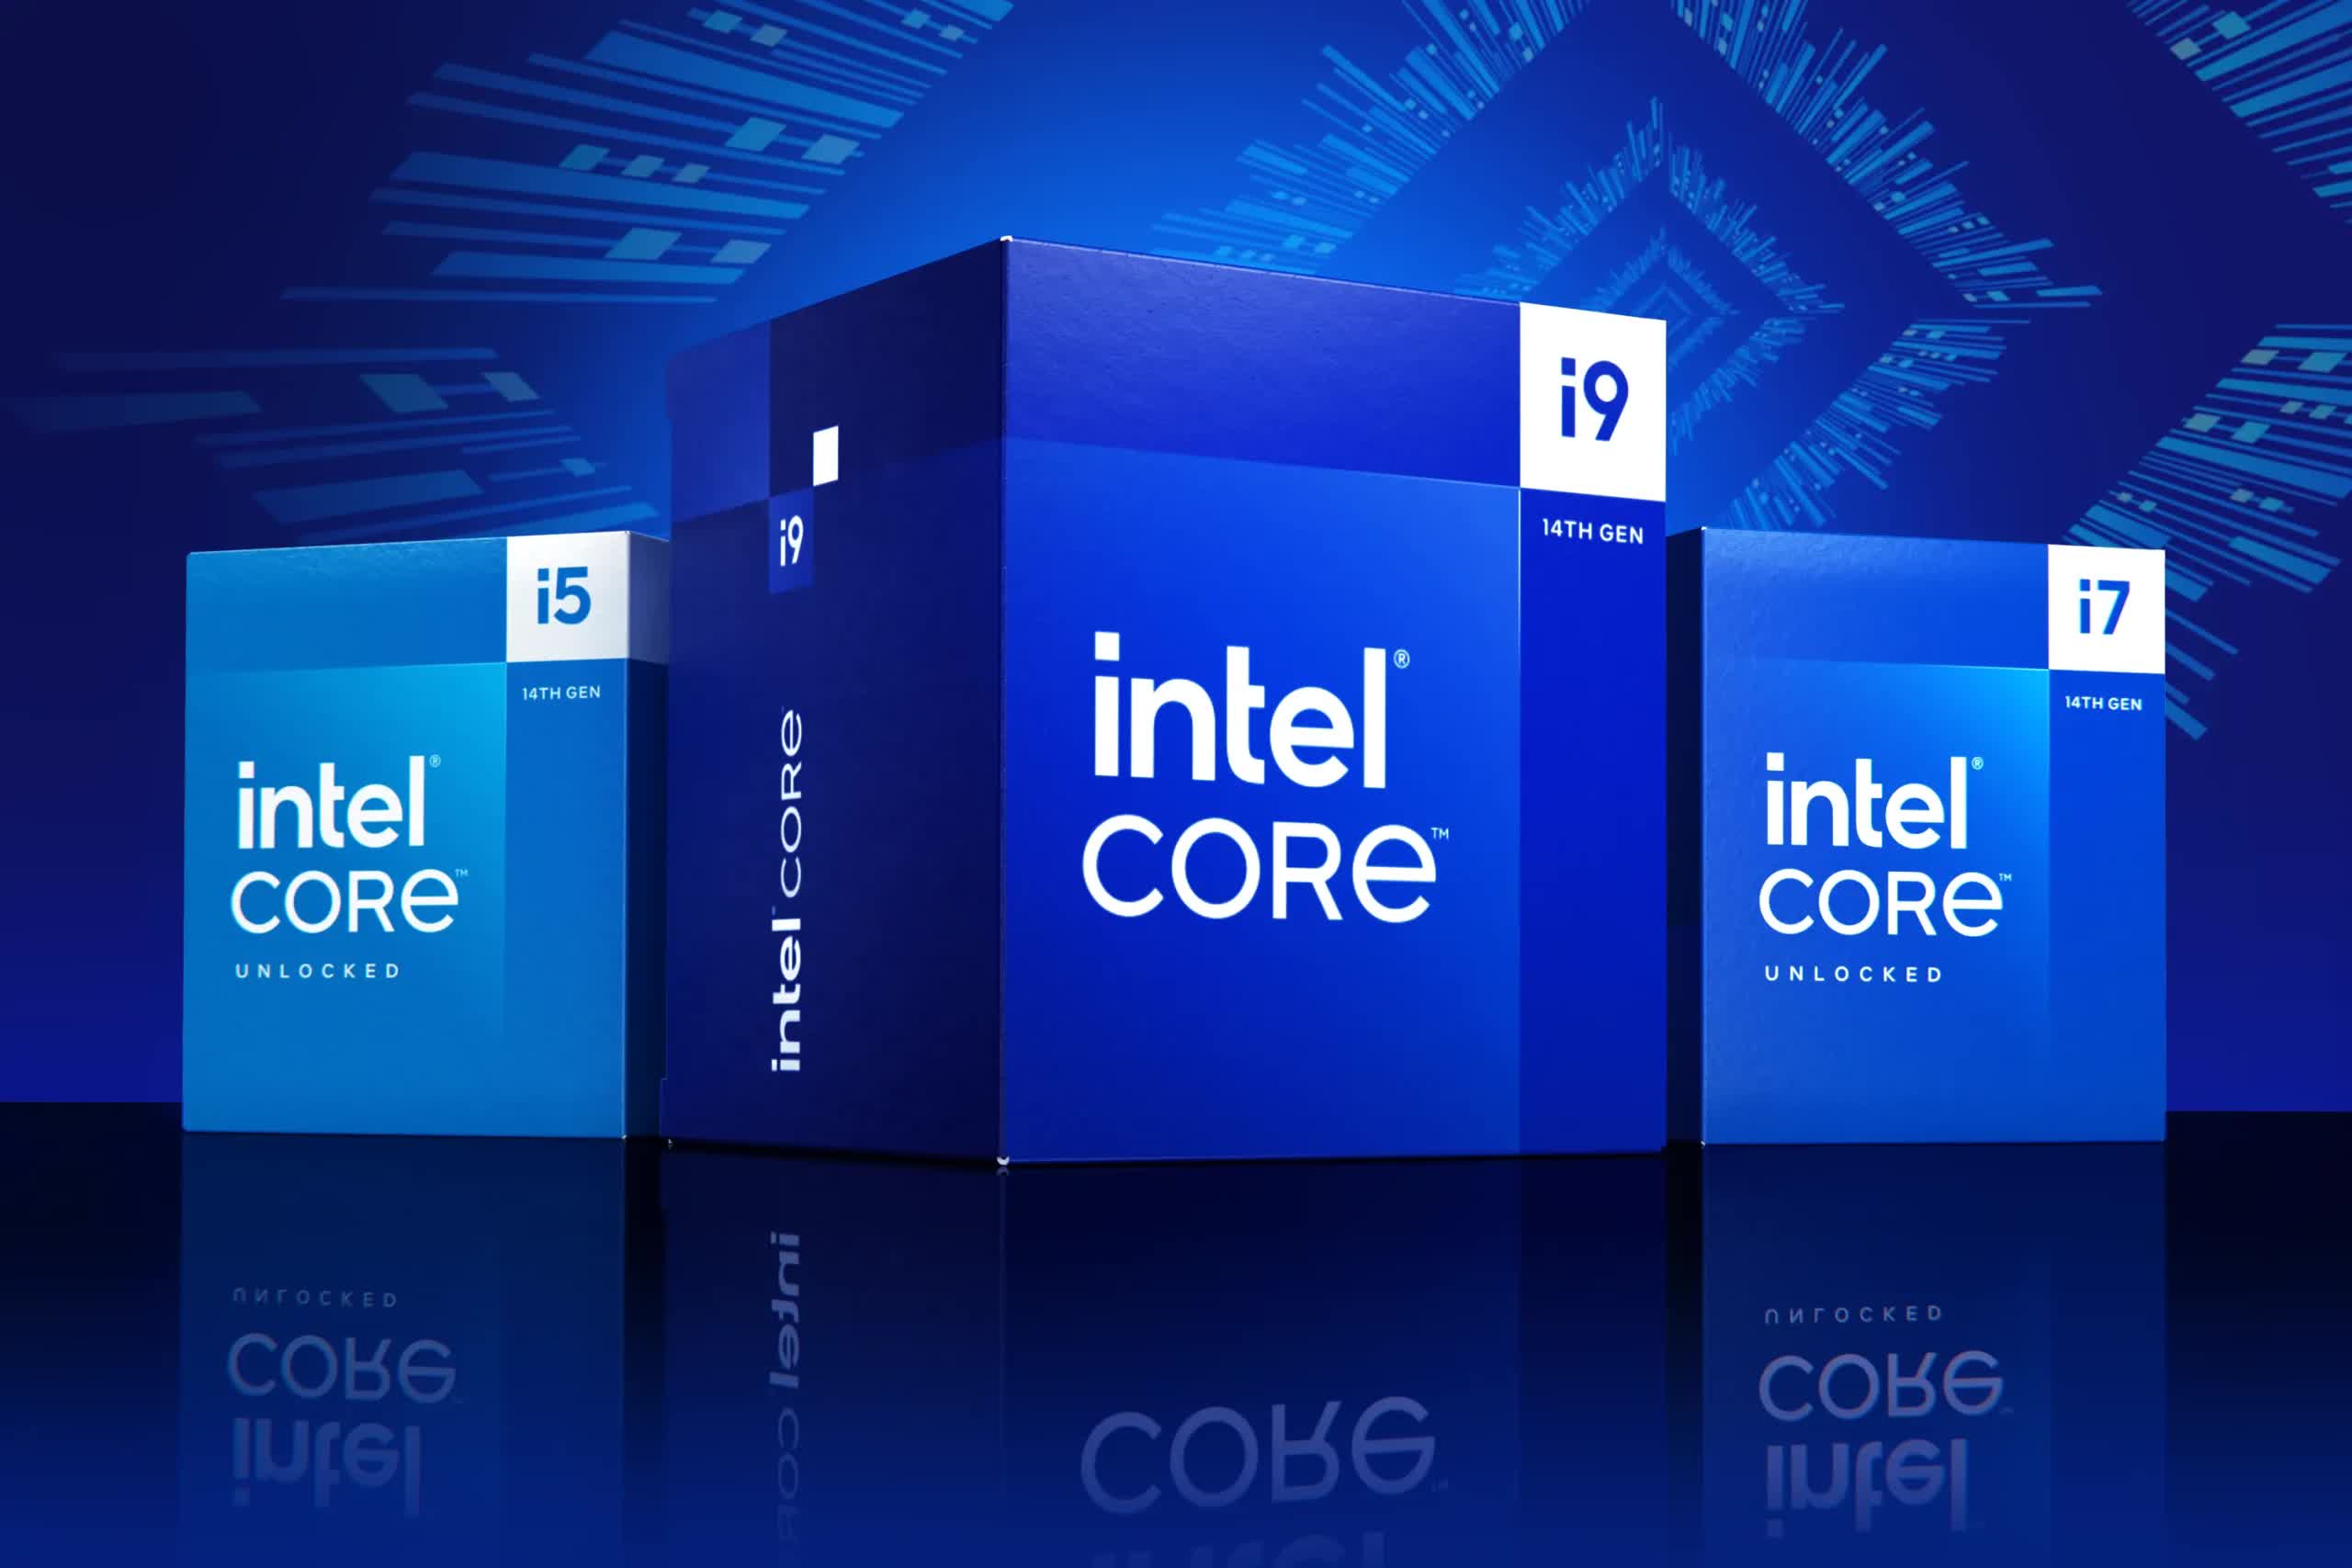 Intel core i9-14900k